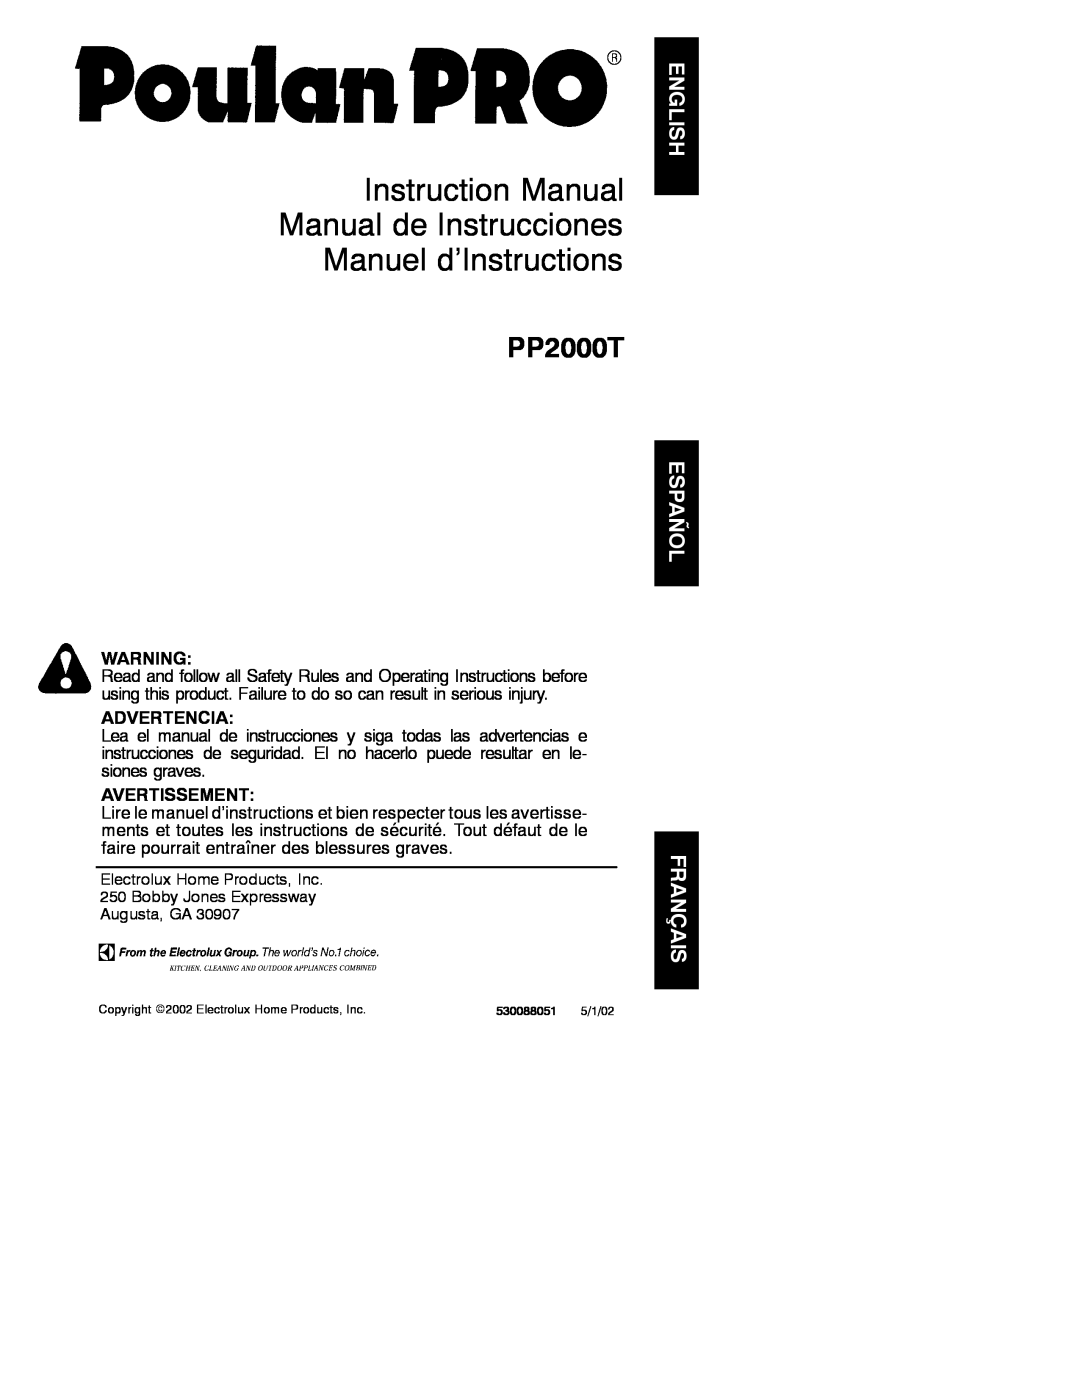 Poulan 530088051 instruction manual Advertencia, Avertissement, Manuel d’Instructions, PP2000T 